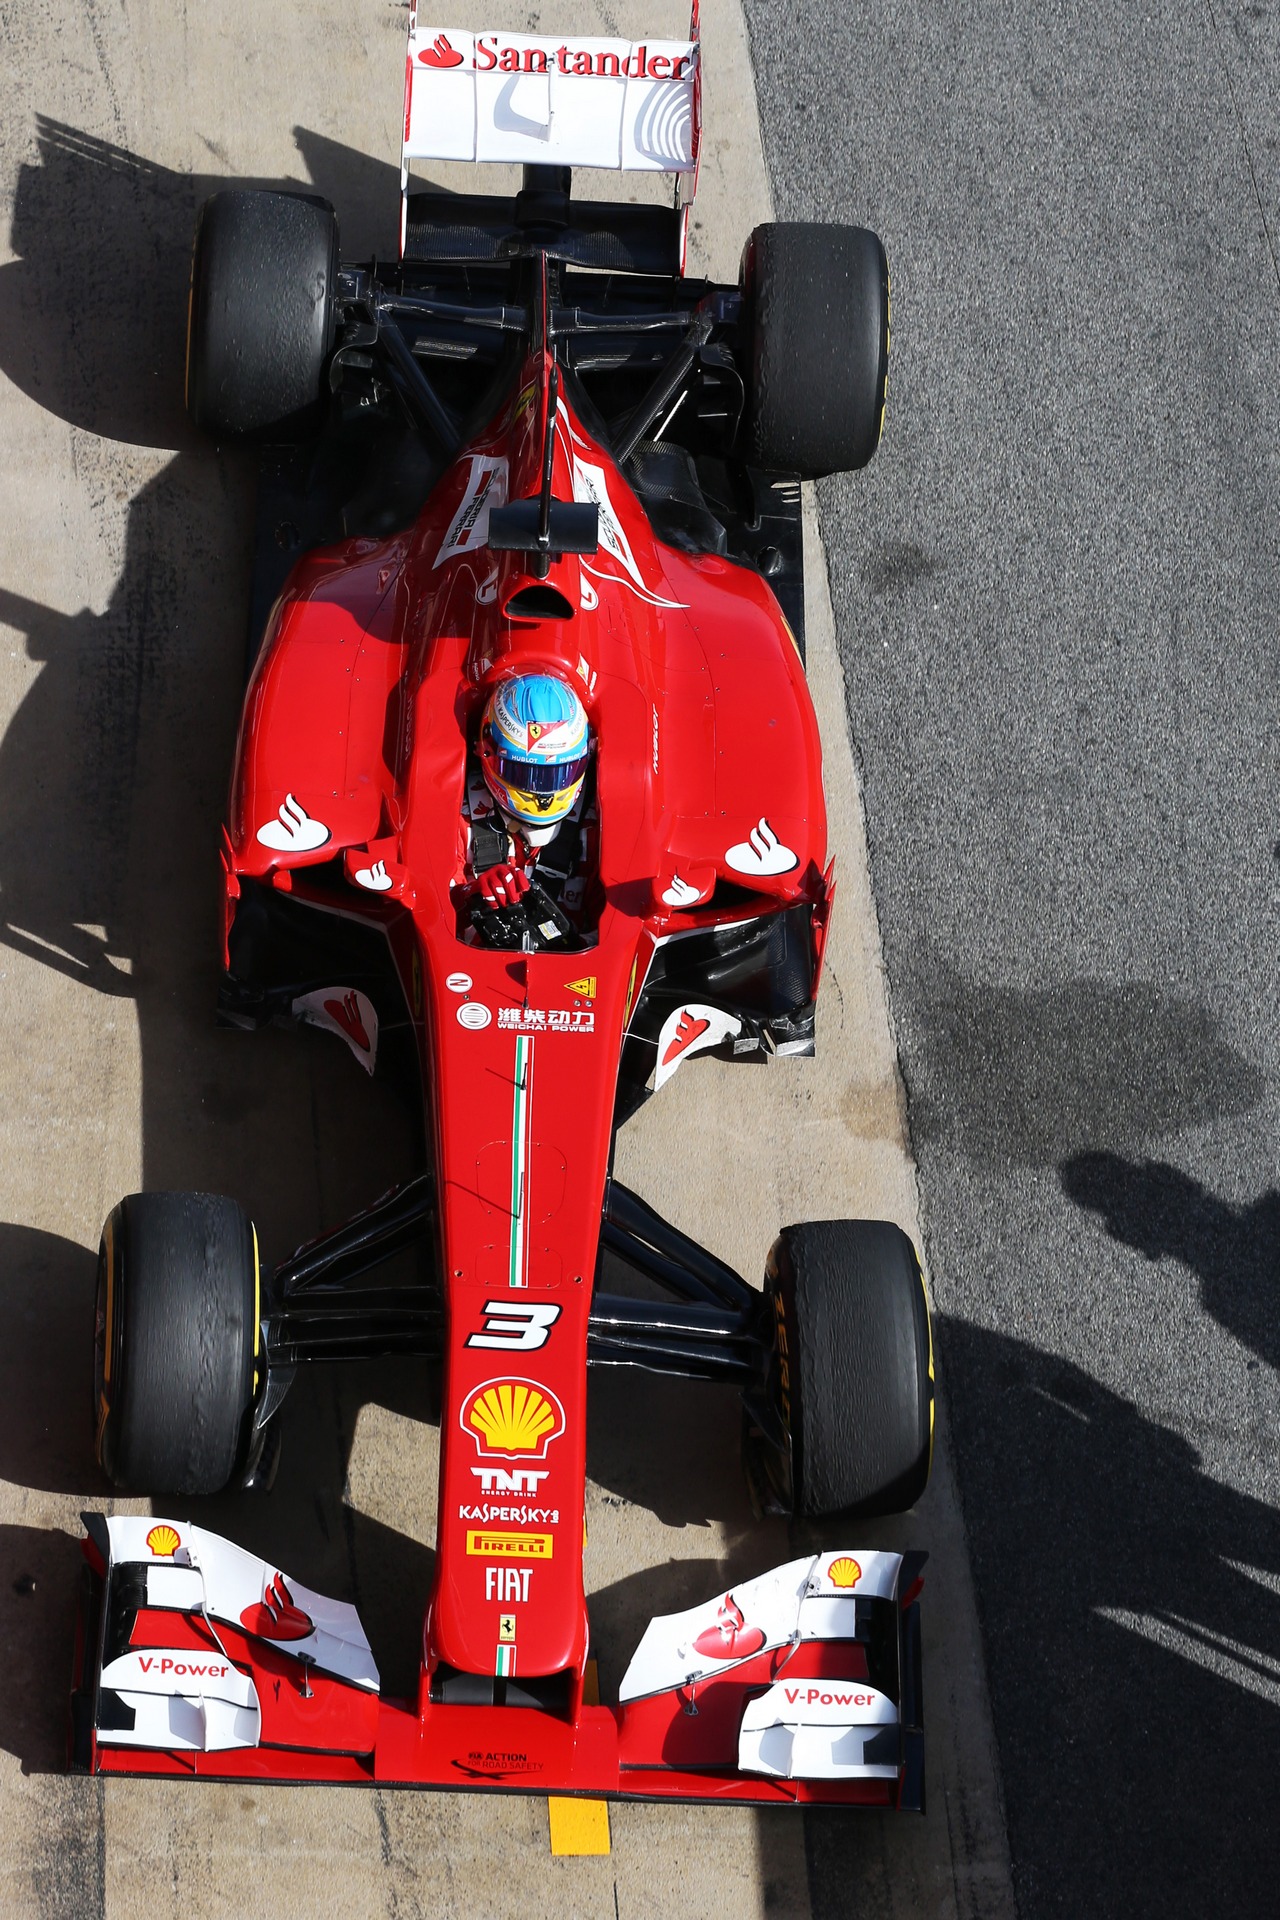 Formula 1 - Test F1 a Barcellona, Spagna 03 03 2013